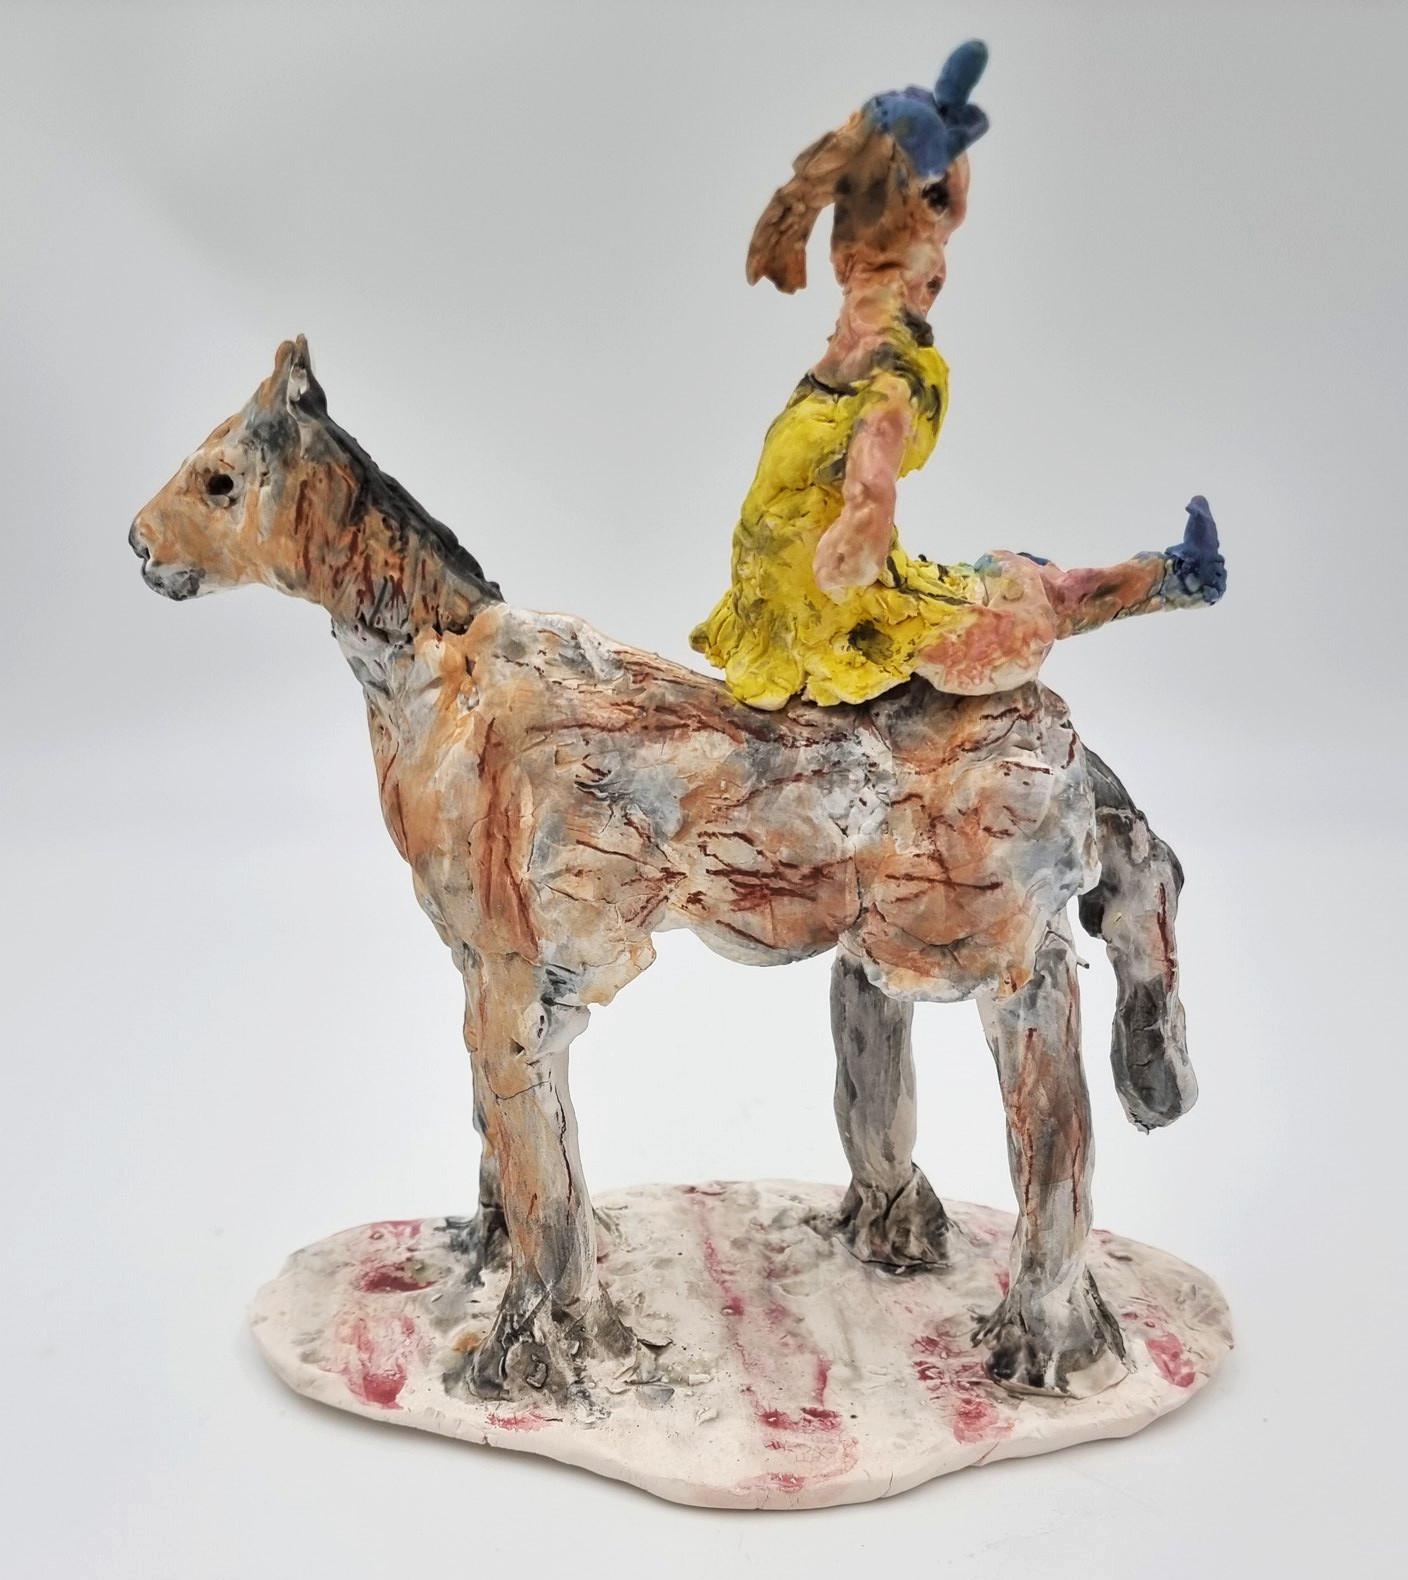 Ann Rothman Figurative Sculpture - Female Acrobat on Horseback (Circus, Whimsical, Viola Frey, Delicate, Playful)